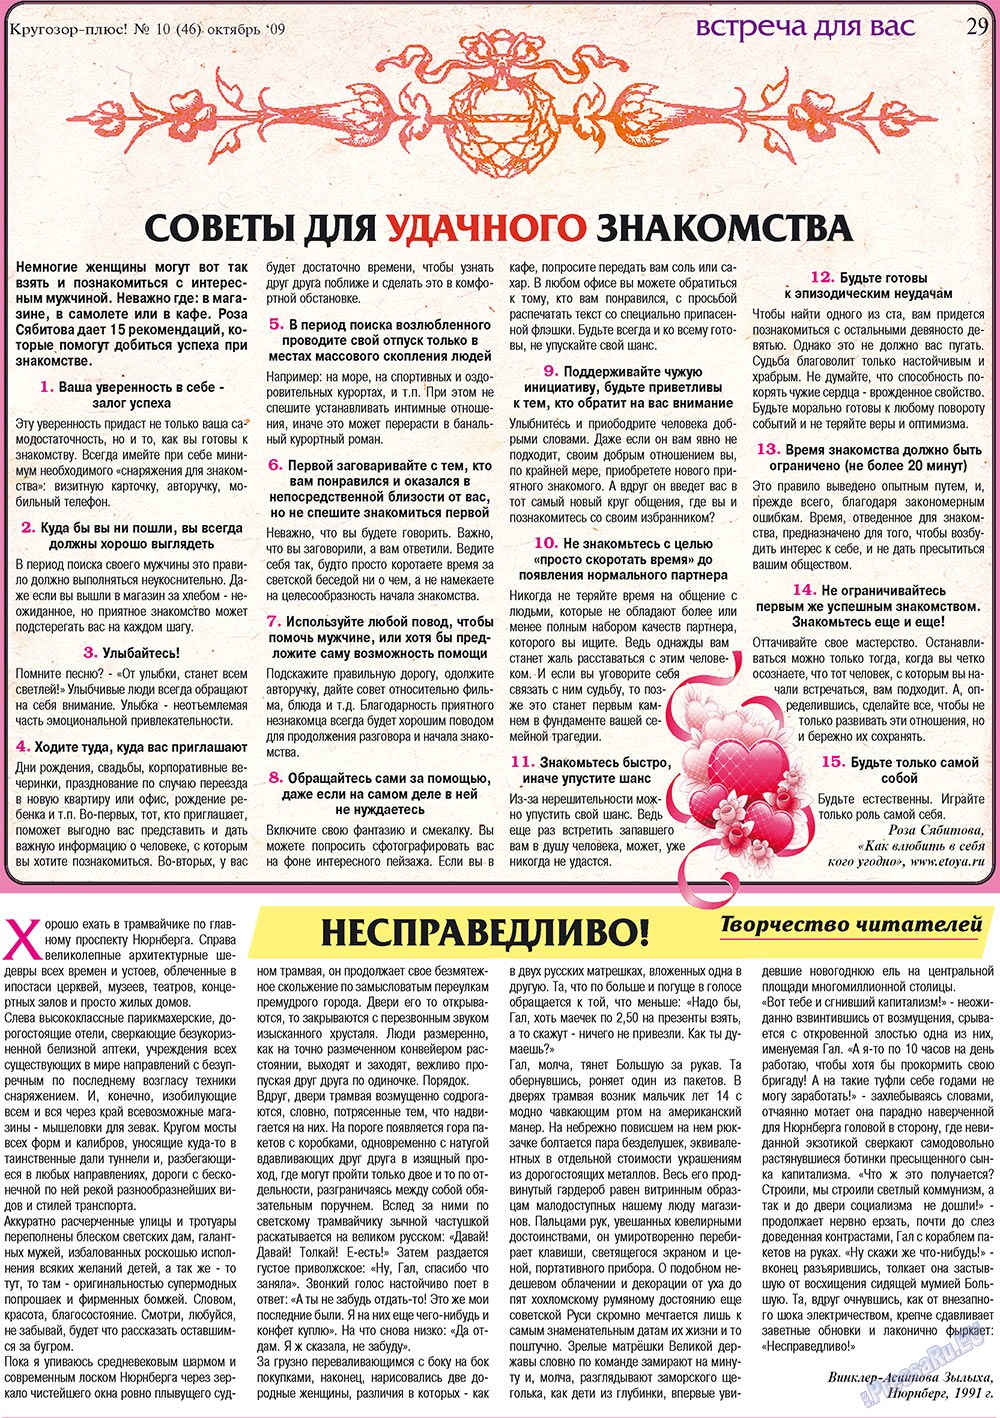 Кругозор плюс! (газета). 2009 год, номер 10, стр. 29